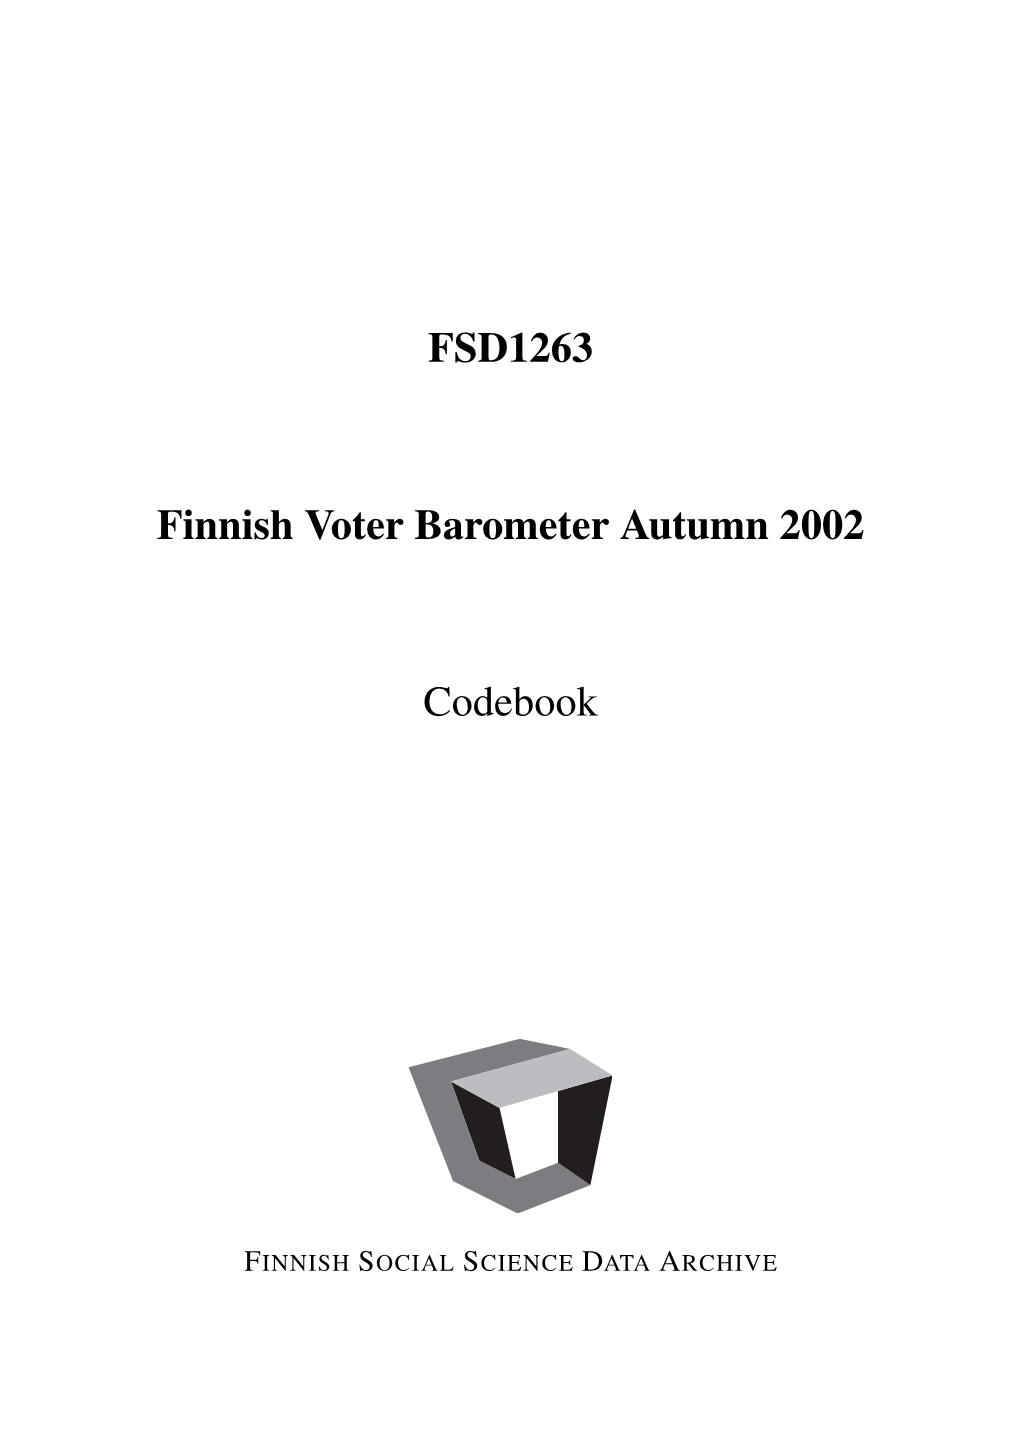 FSD1263 Finnish Voter Barometer Autumn 2002 Codebook